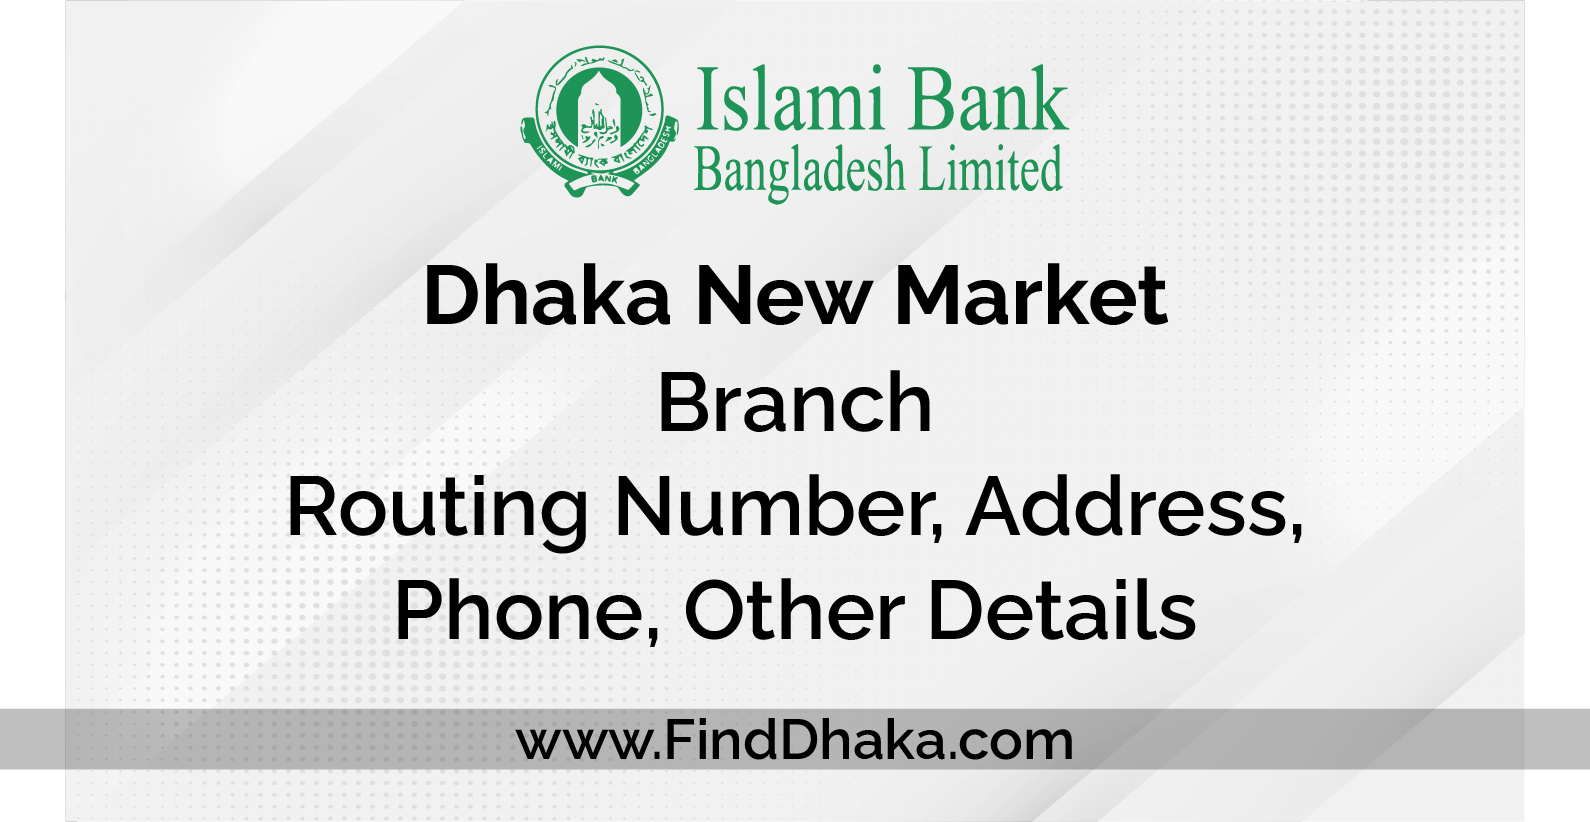 Islami Bank info011000 1